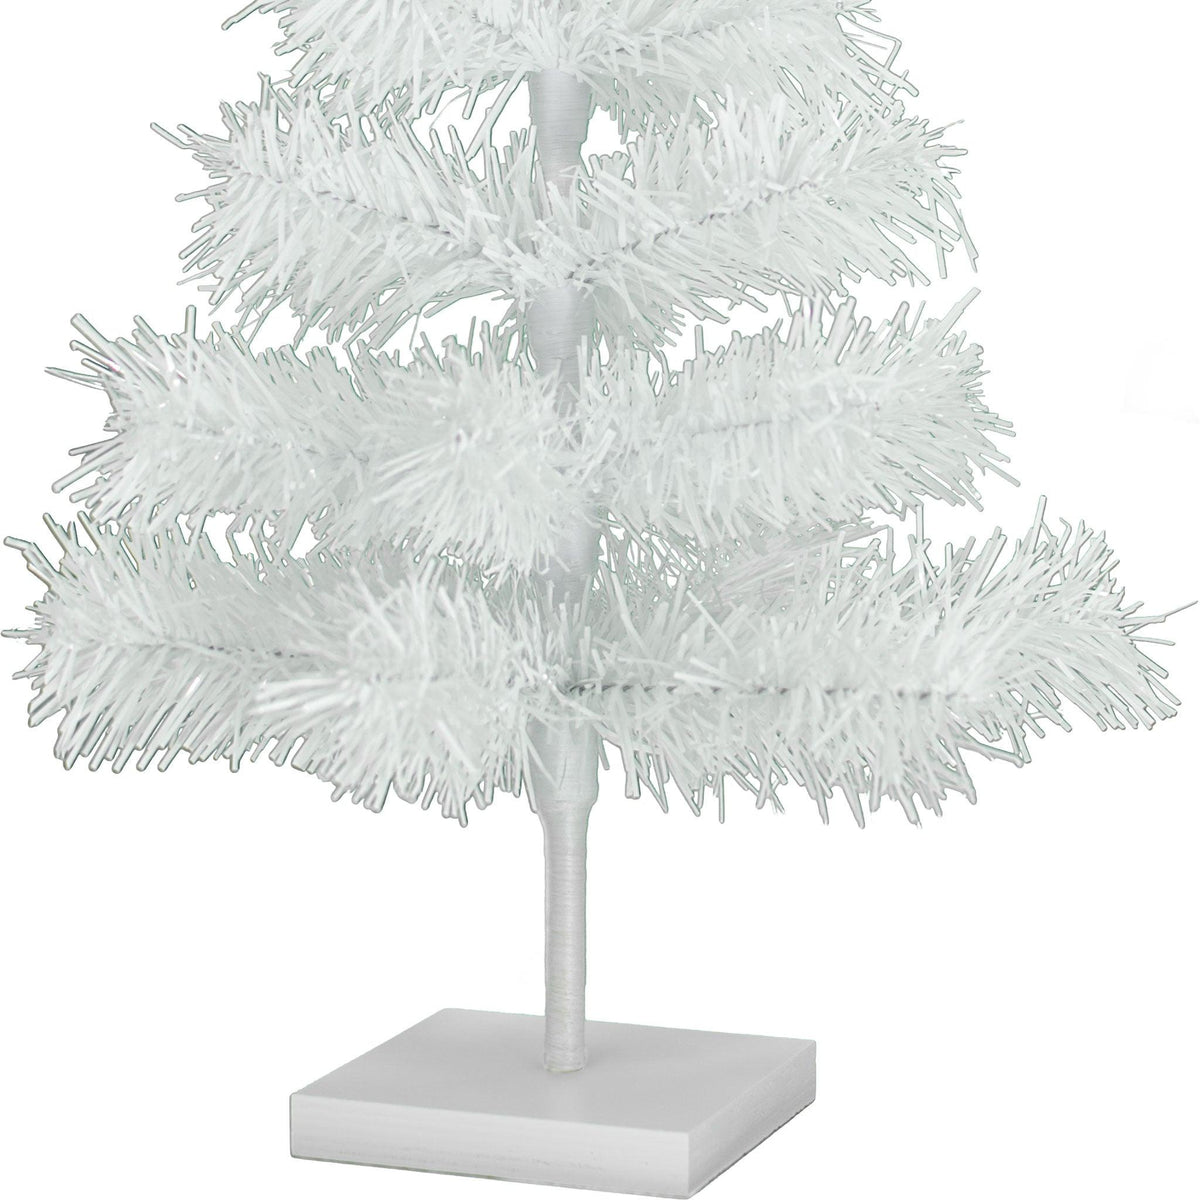 Lee Display's 18in White Tinsel Christmas Tree sold at leedisplay.com